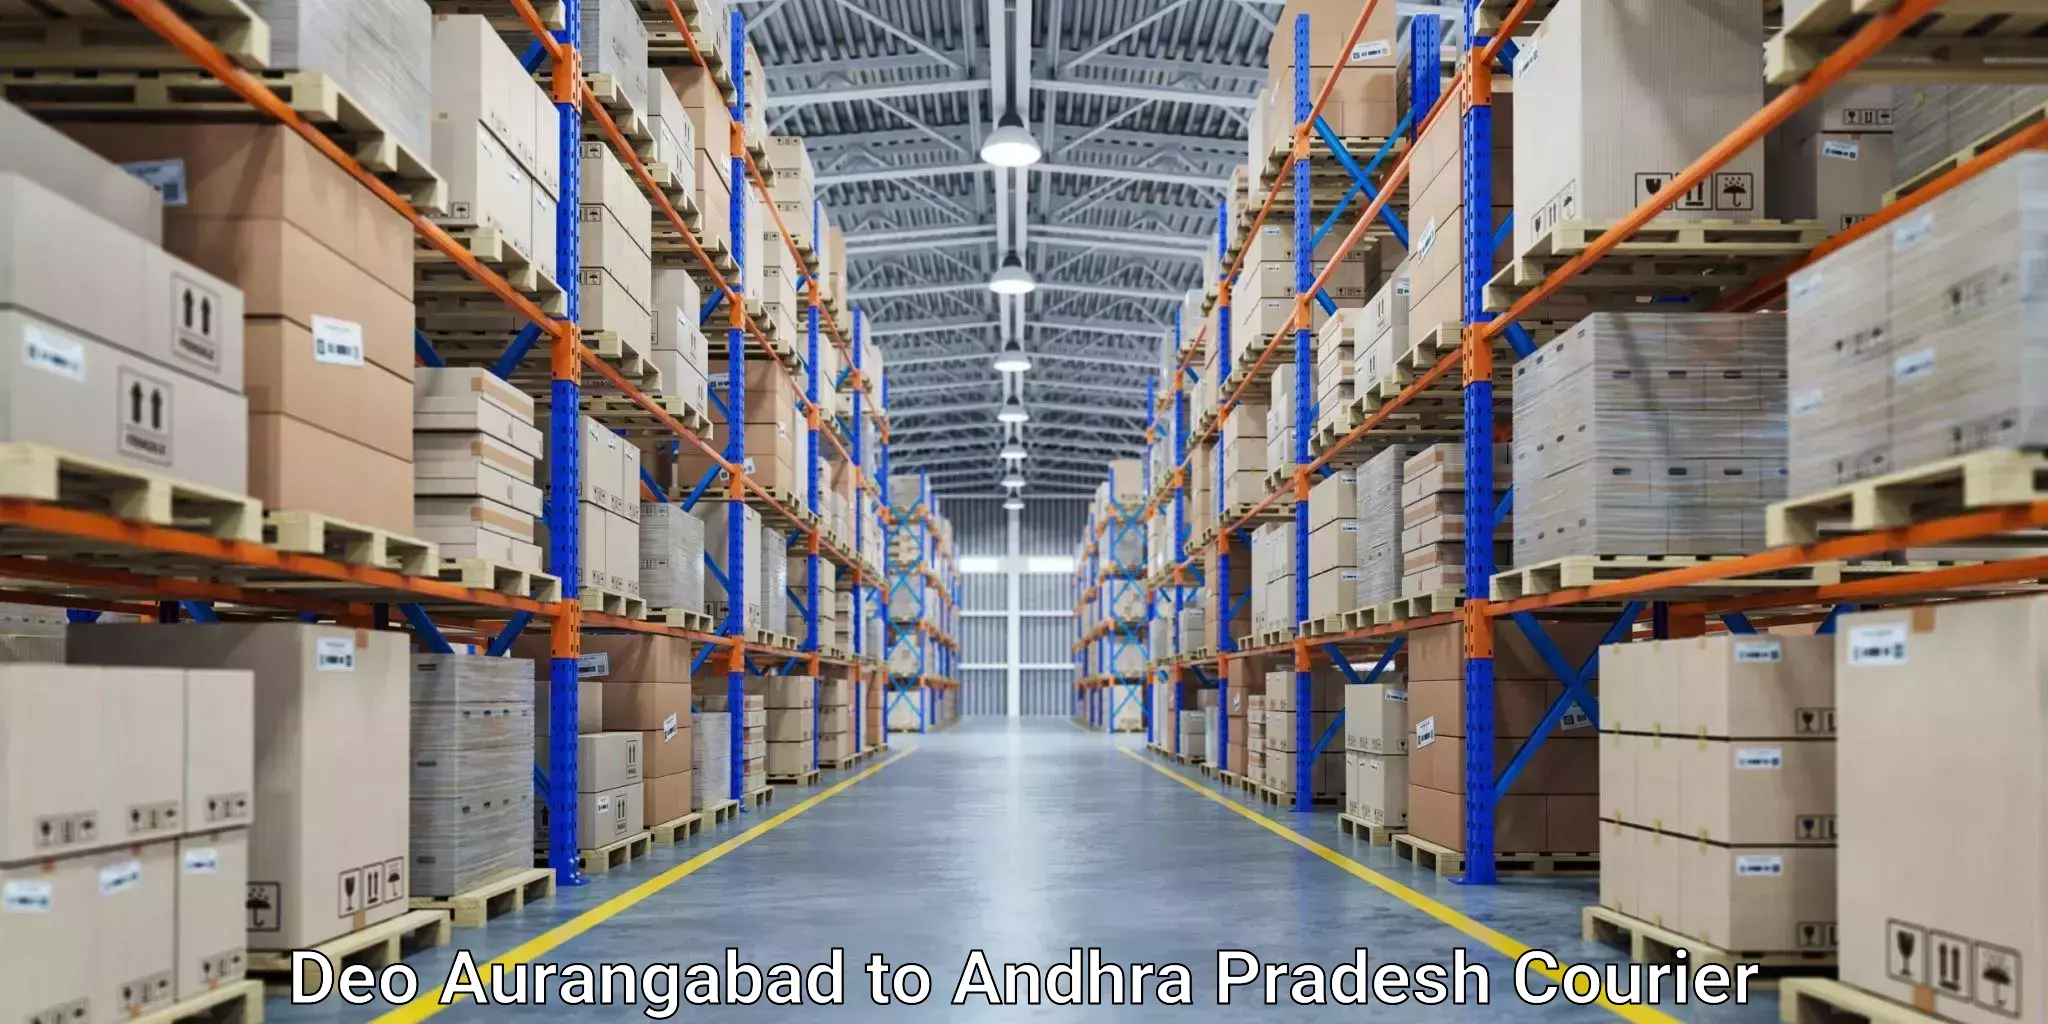 Cargo delivery service Deo Aurangabad to Vempalli